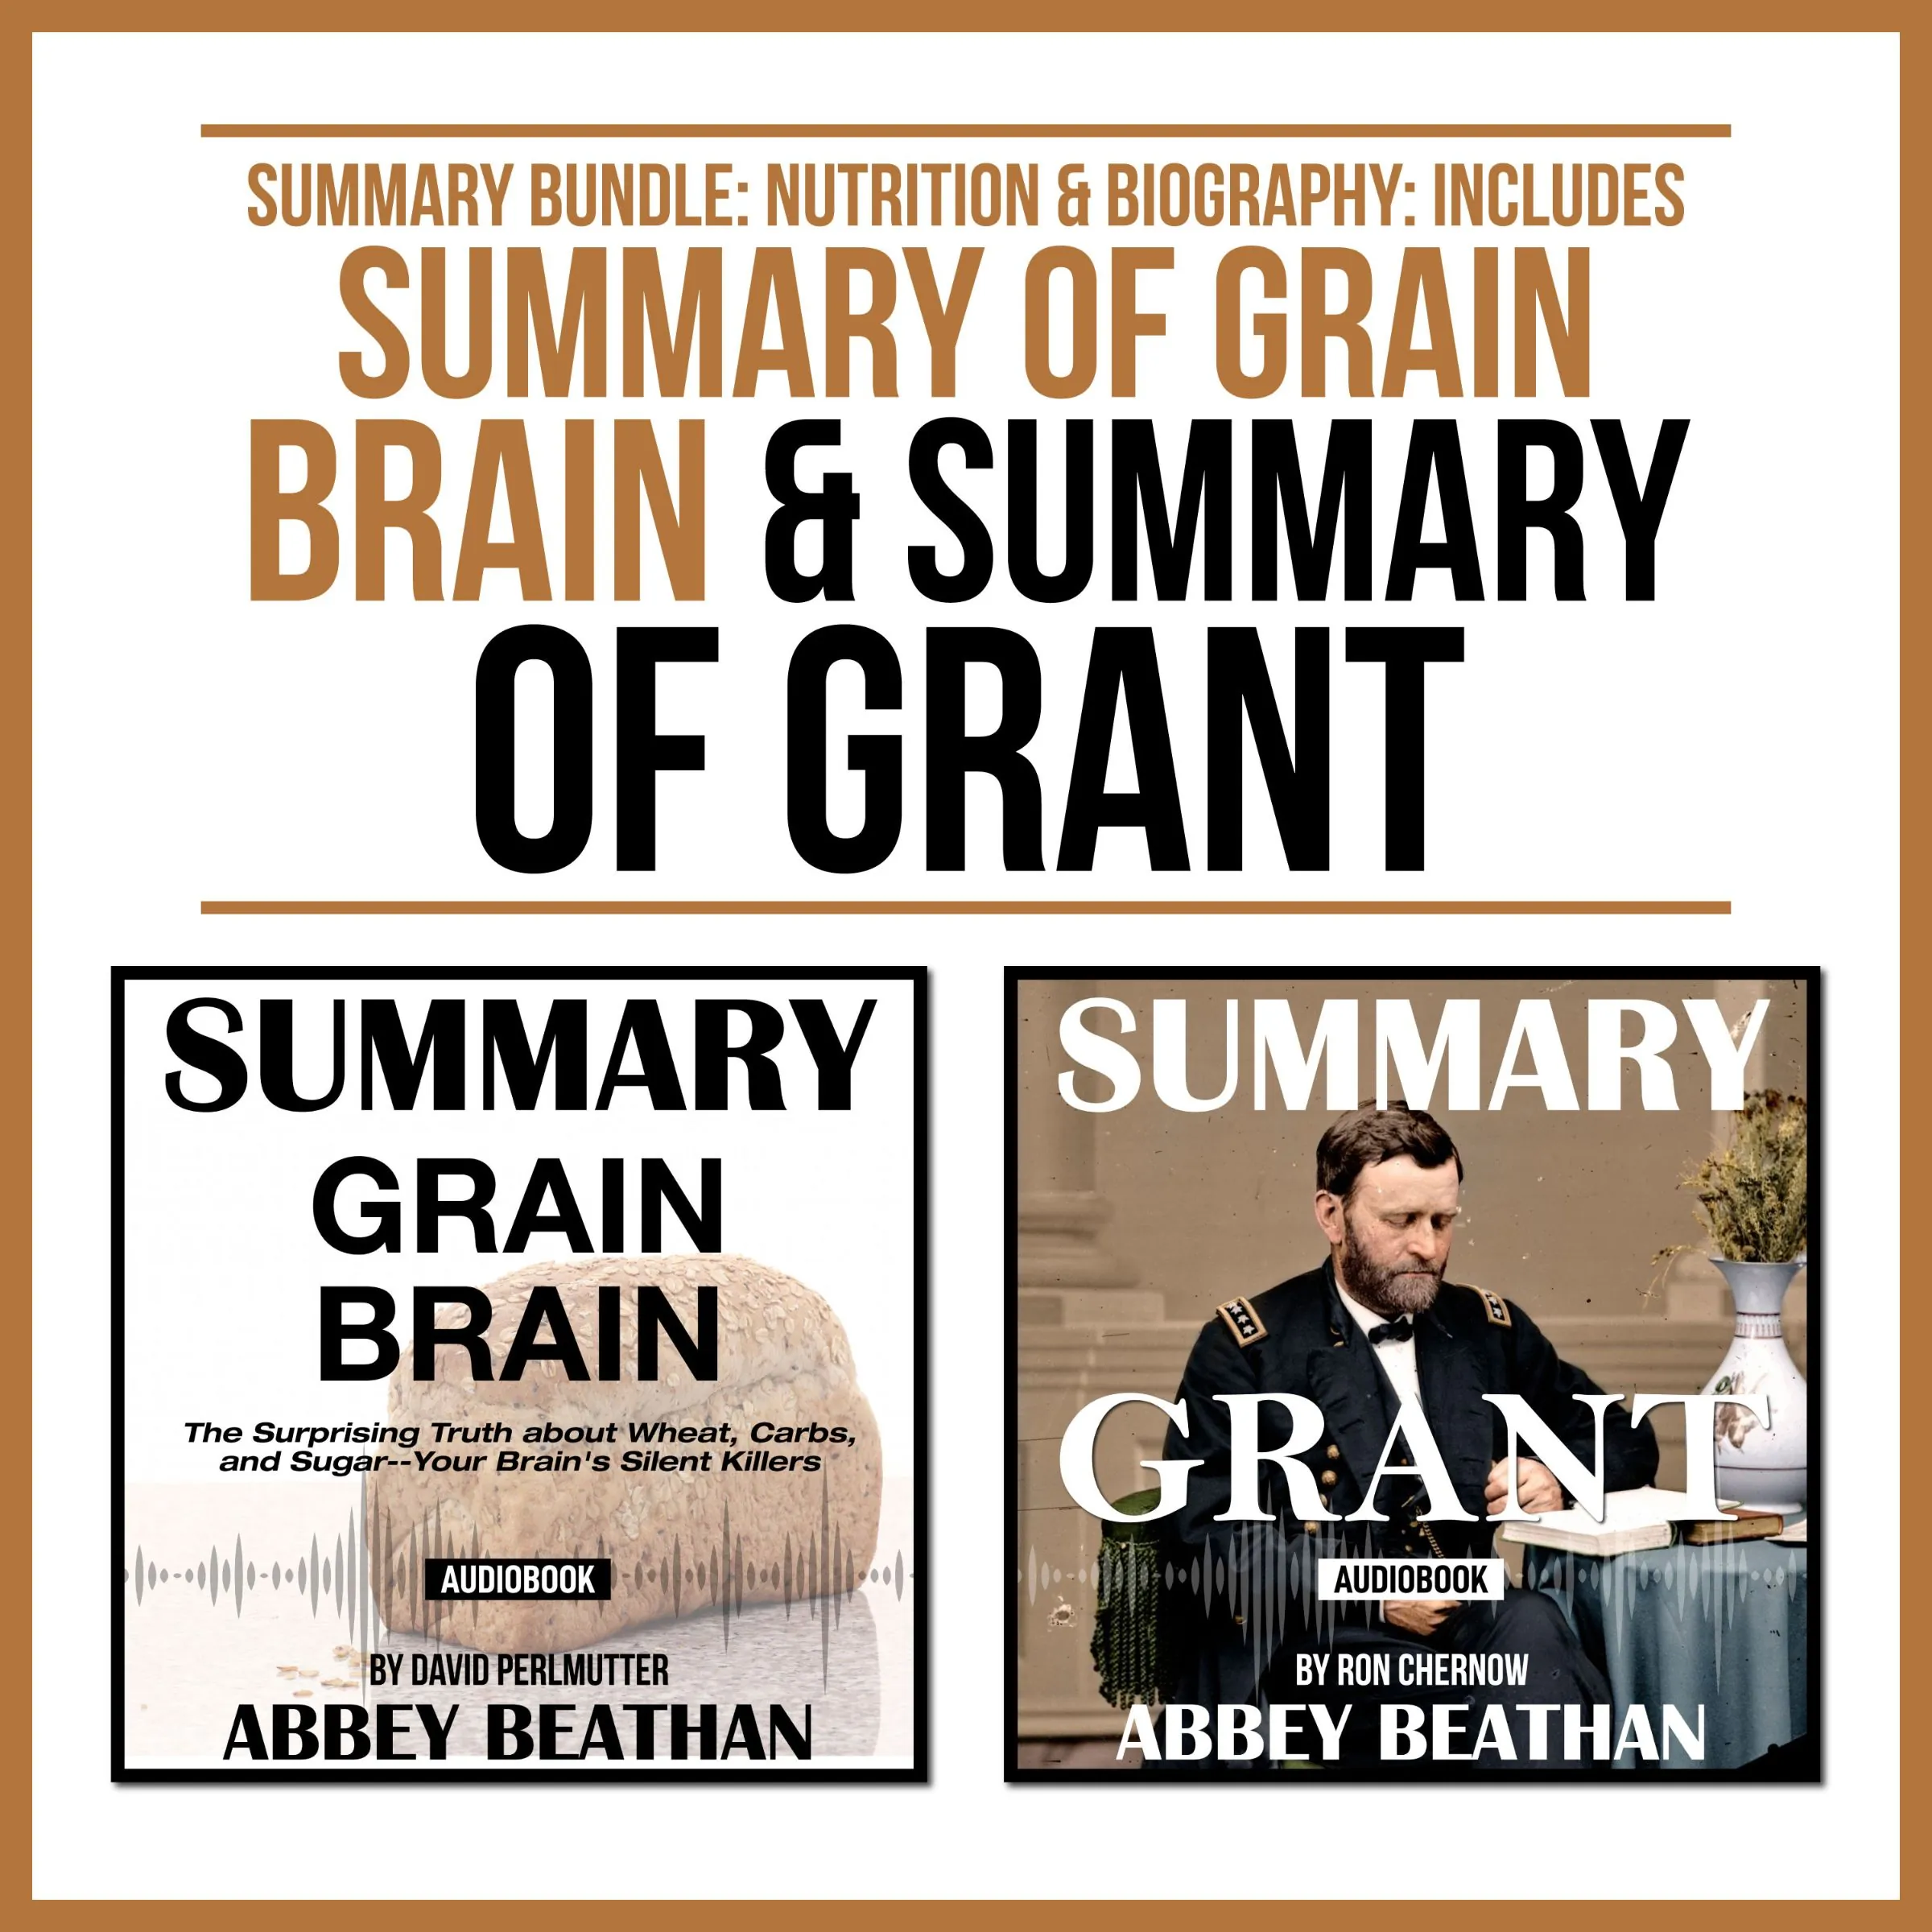 Summary Bundle: Nutrition & Biography: Includes Summary of Grain Brain & Summary of Grant Audiobook by Abbey Beathan